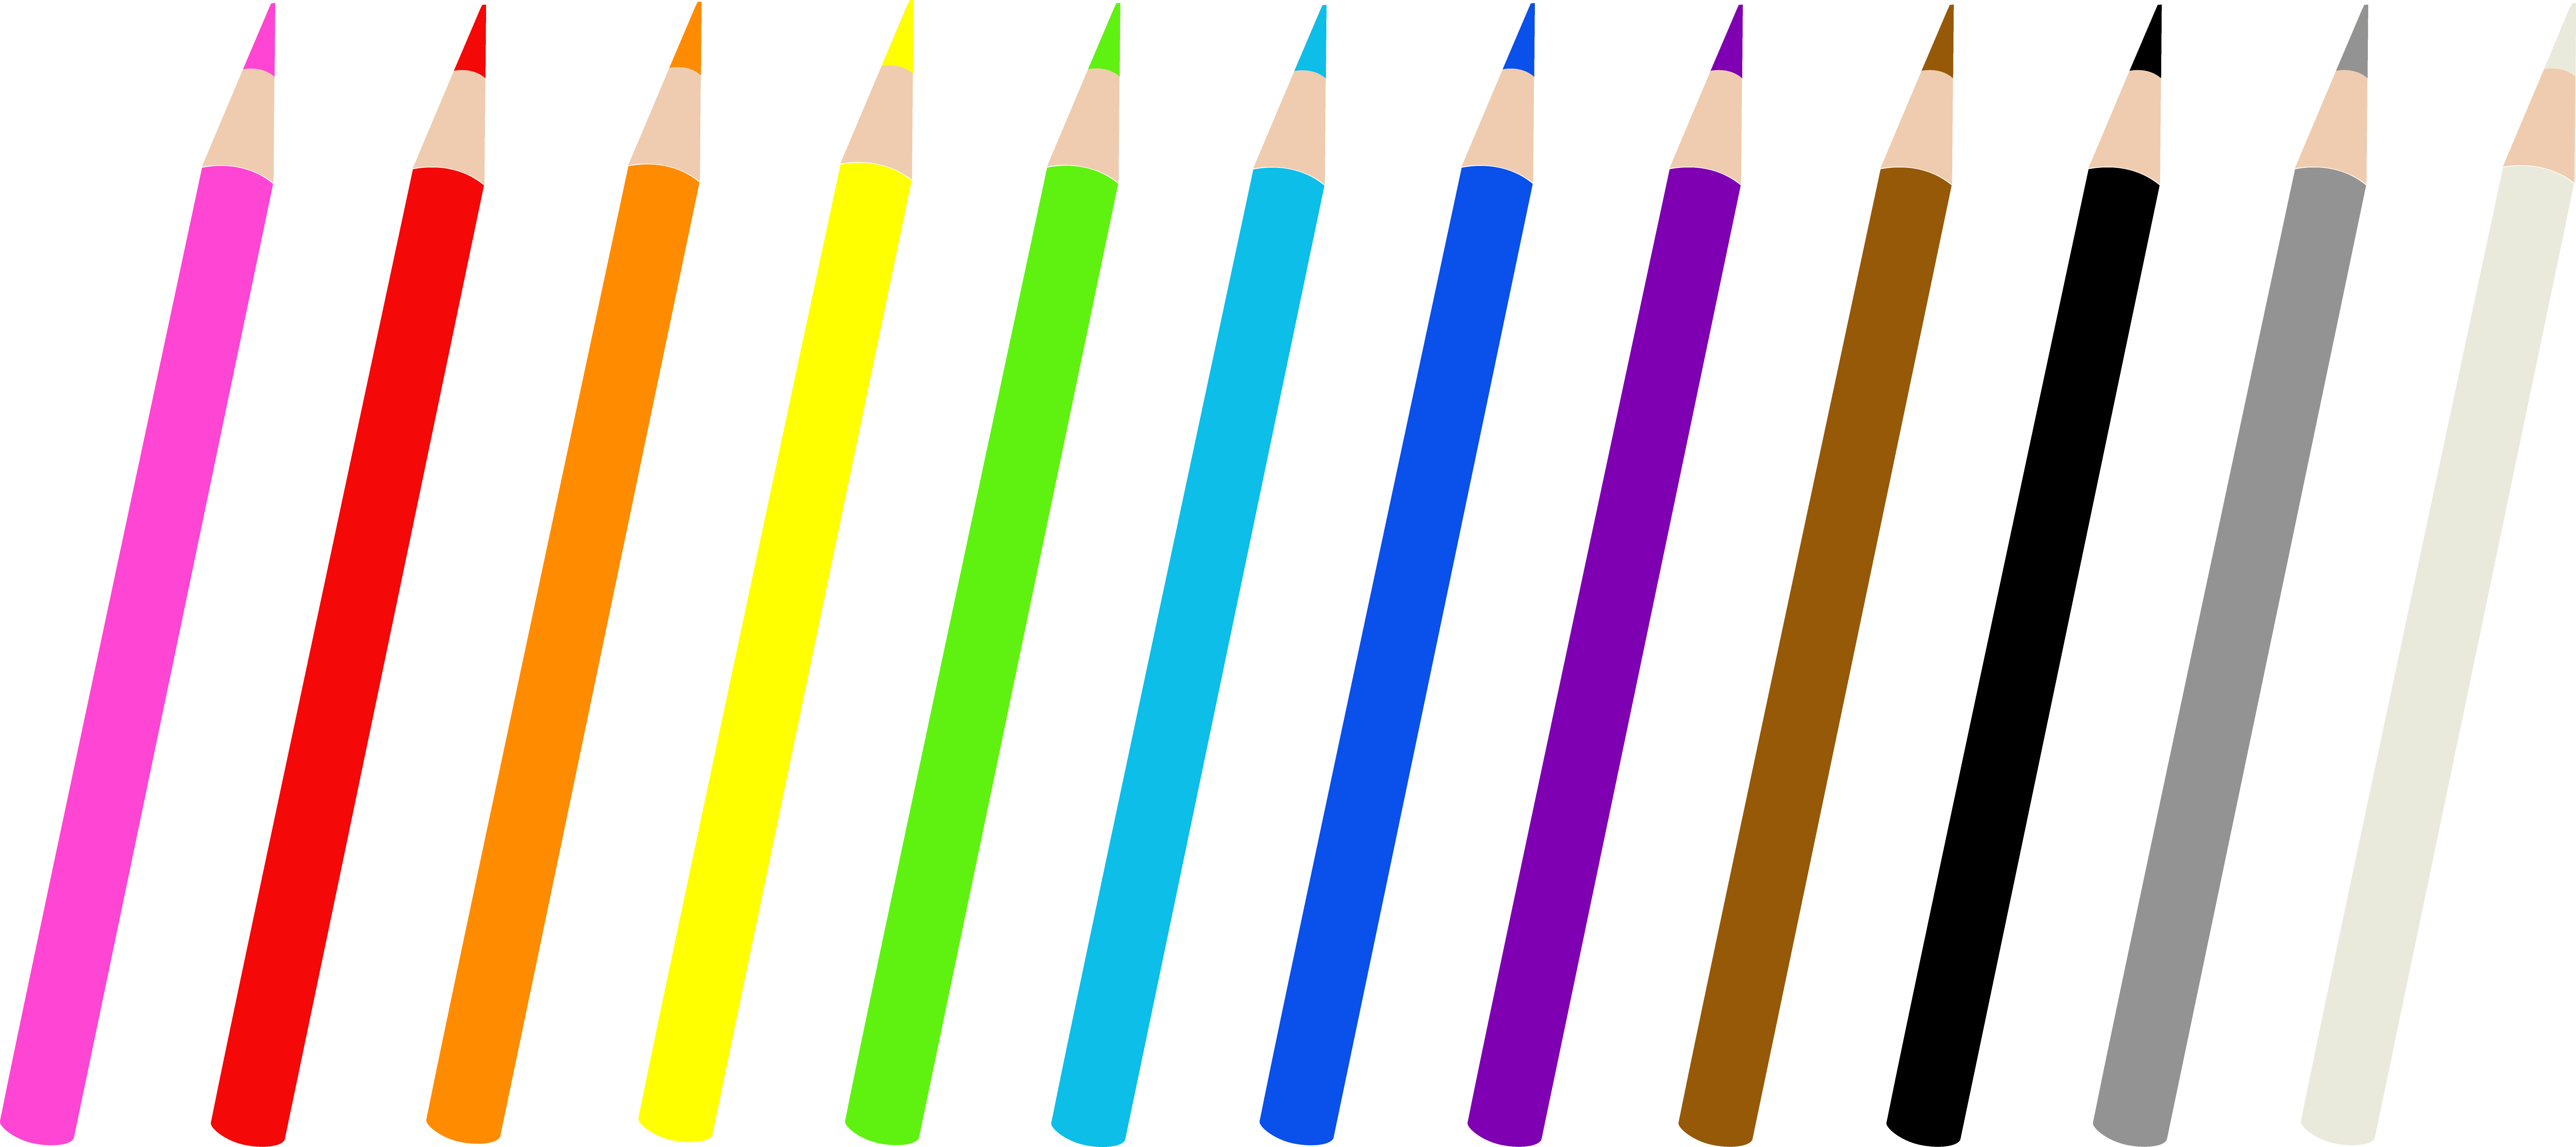 Color pencil art yahoo. Pencils clipart shape